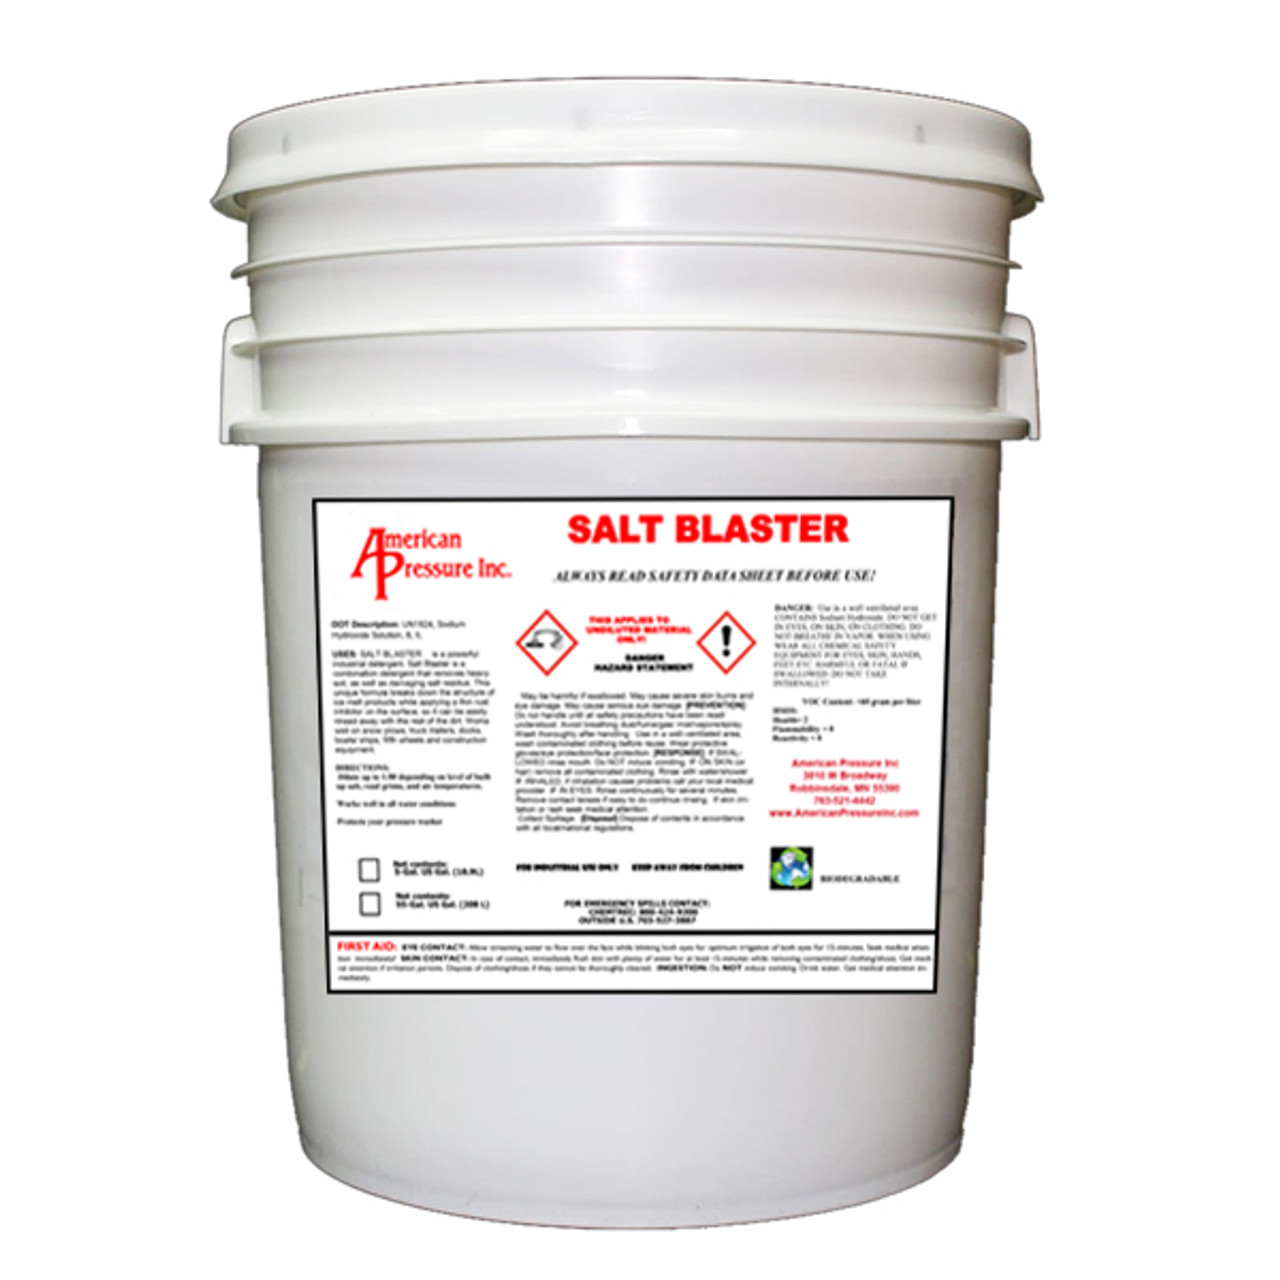 American Pressure - Salt Blaster - Industrial Detergent